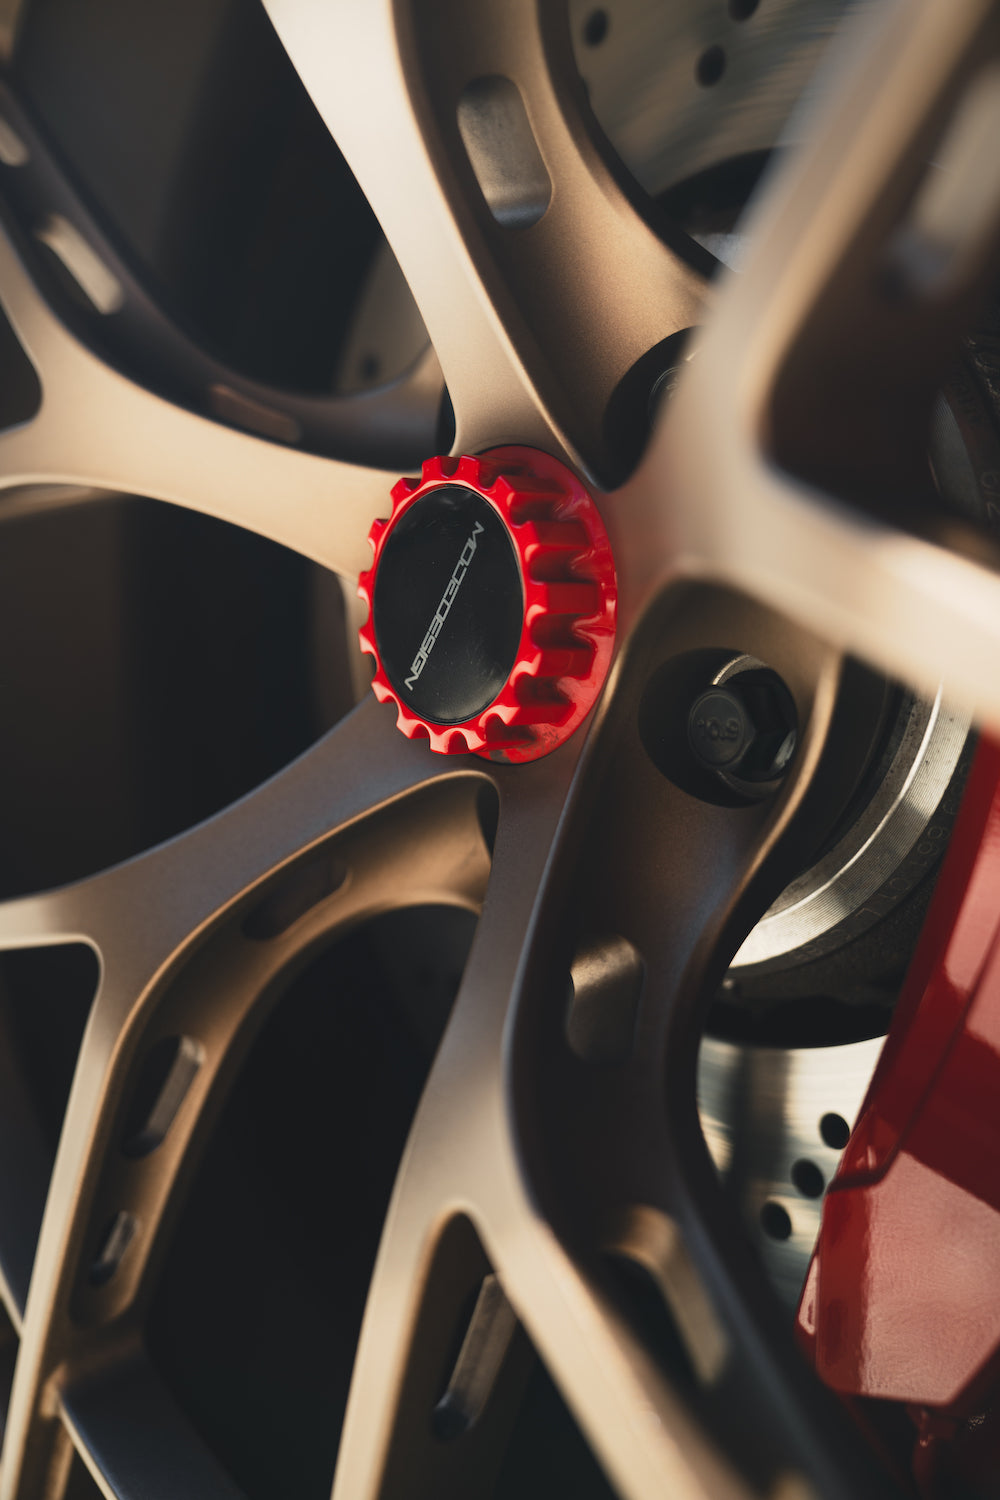 MODE Design FR-1 Evolution Forged Wheel - 1PC Monoblock Wheels - (Exclusive to BMW & Porsche Only) - MODE Auto Concepts